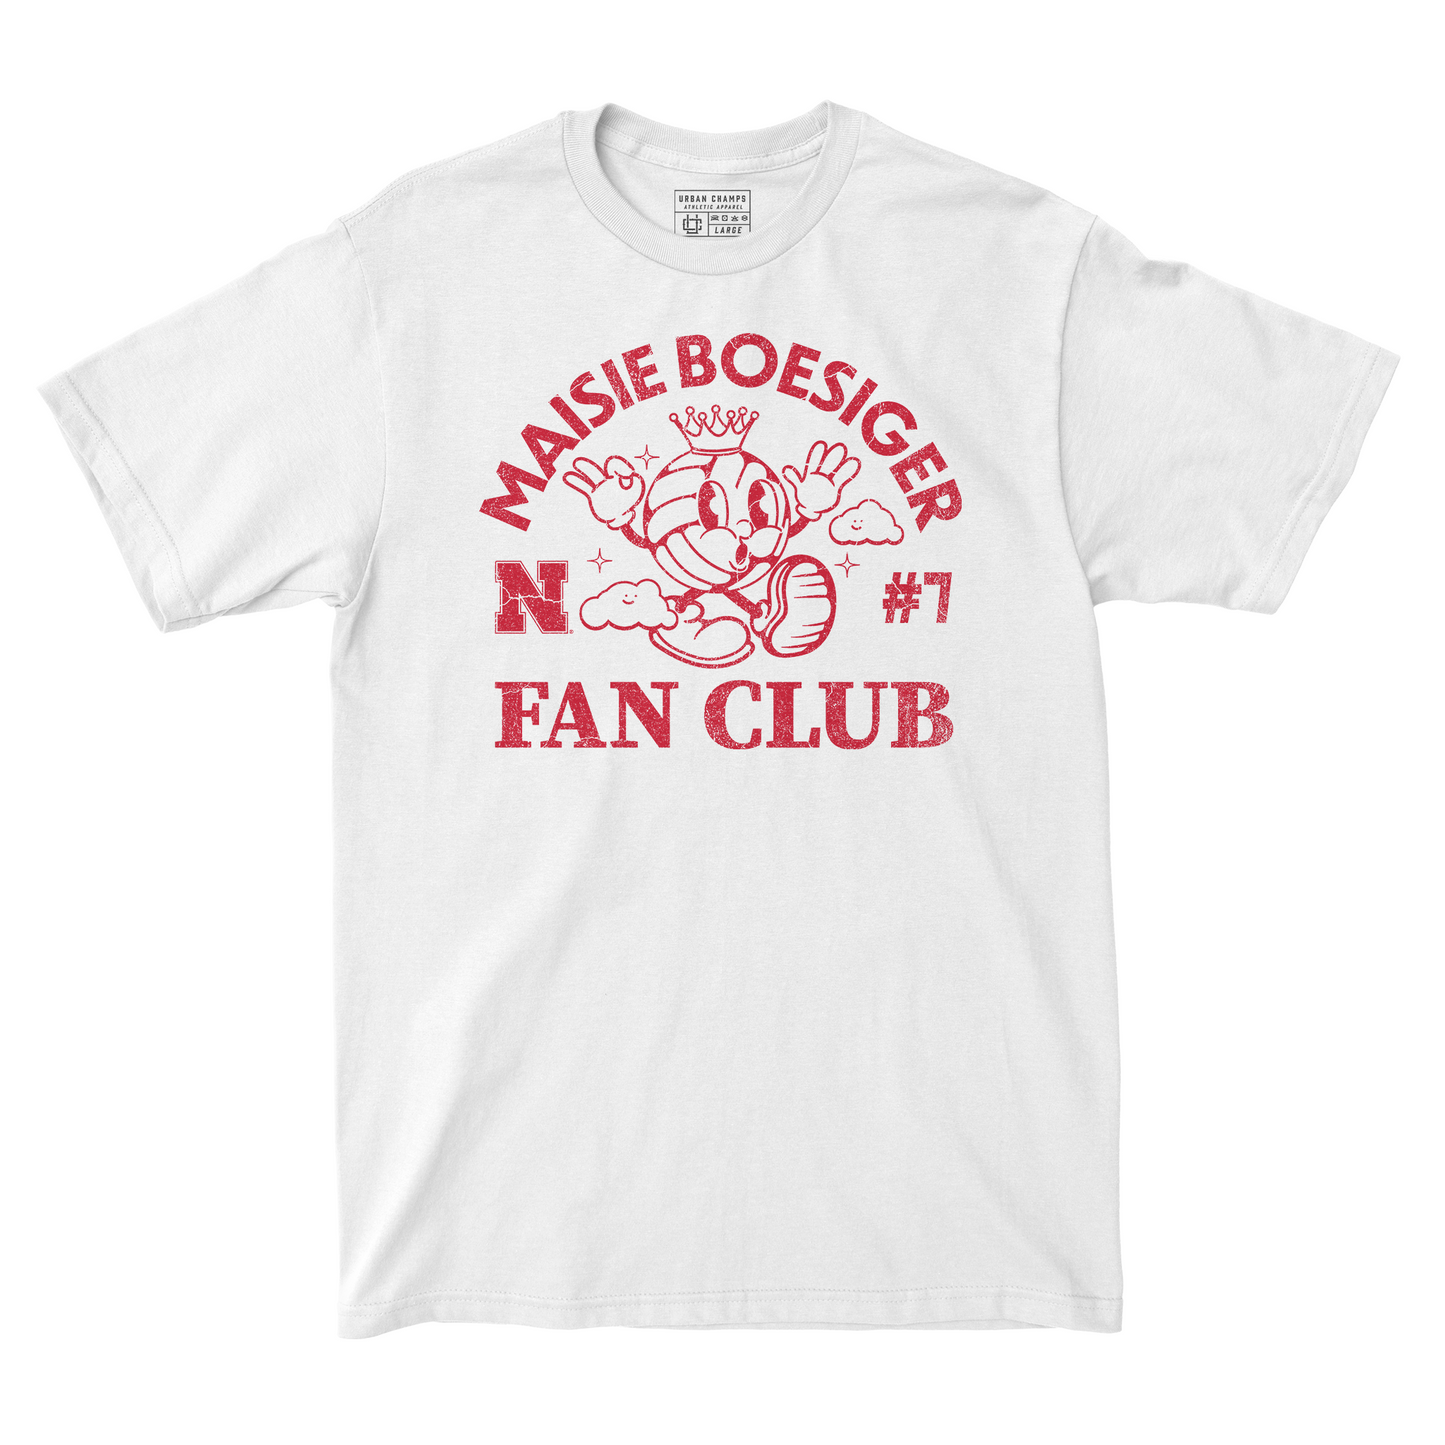 EXCLUSIVE: Nebraska Women's Volleyball - Maisie Boesiger - Fan Club Collection Tees